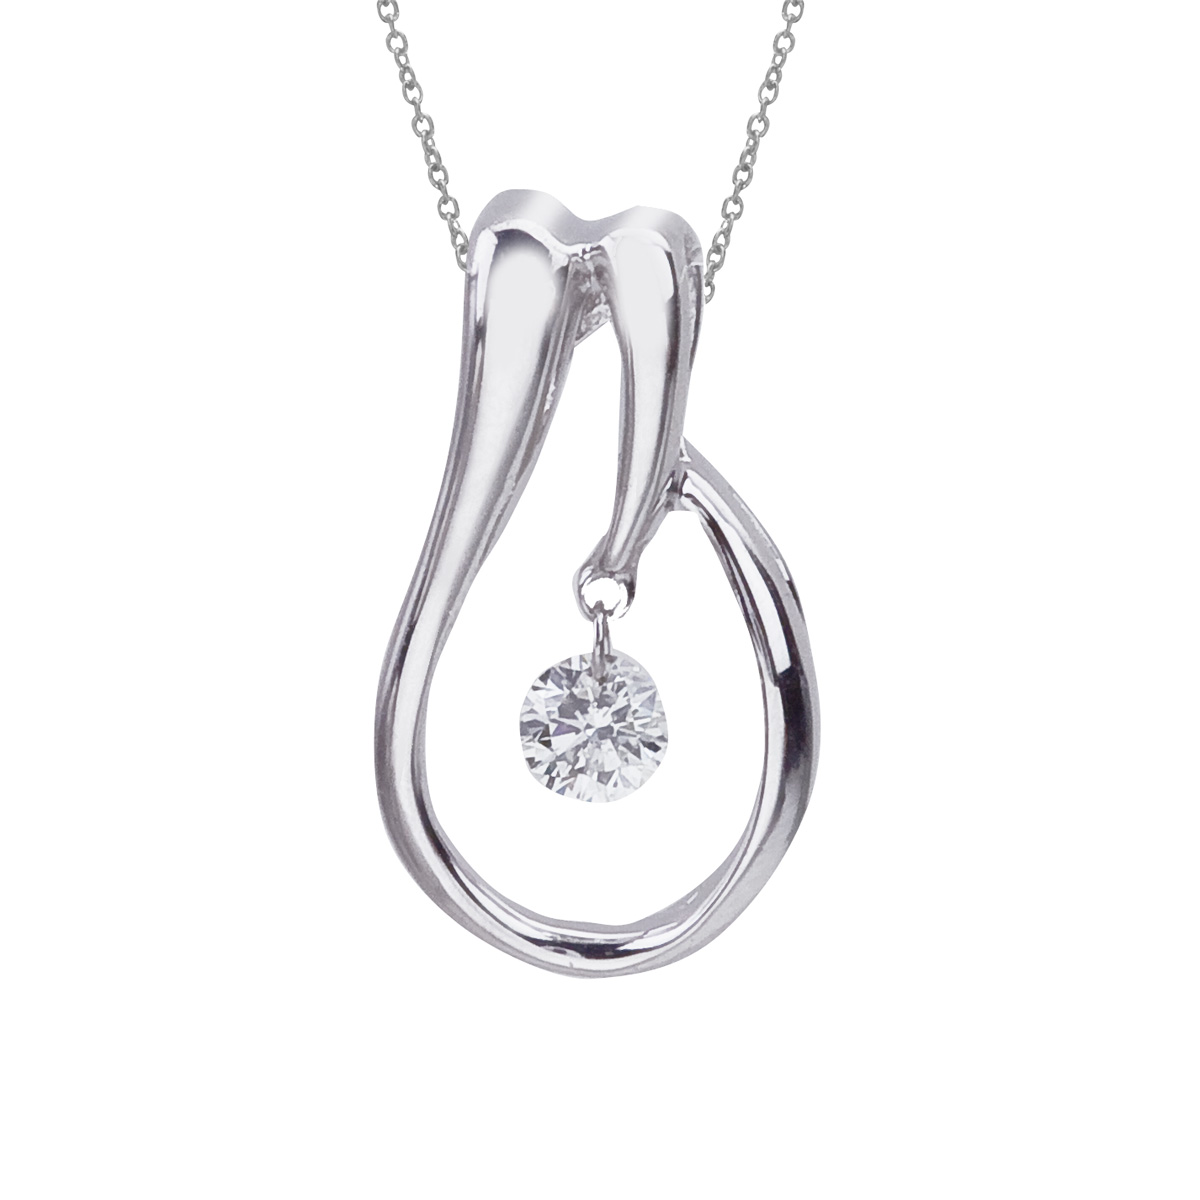 14k gold Dashinng Diamonds pendant with 0.10 total ct diamonds. The center dangling diamond dance...